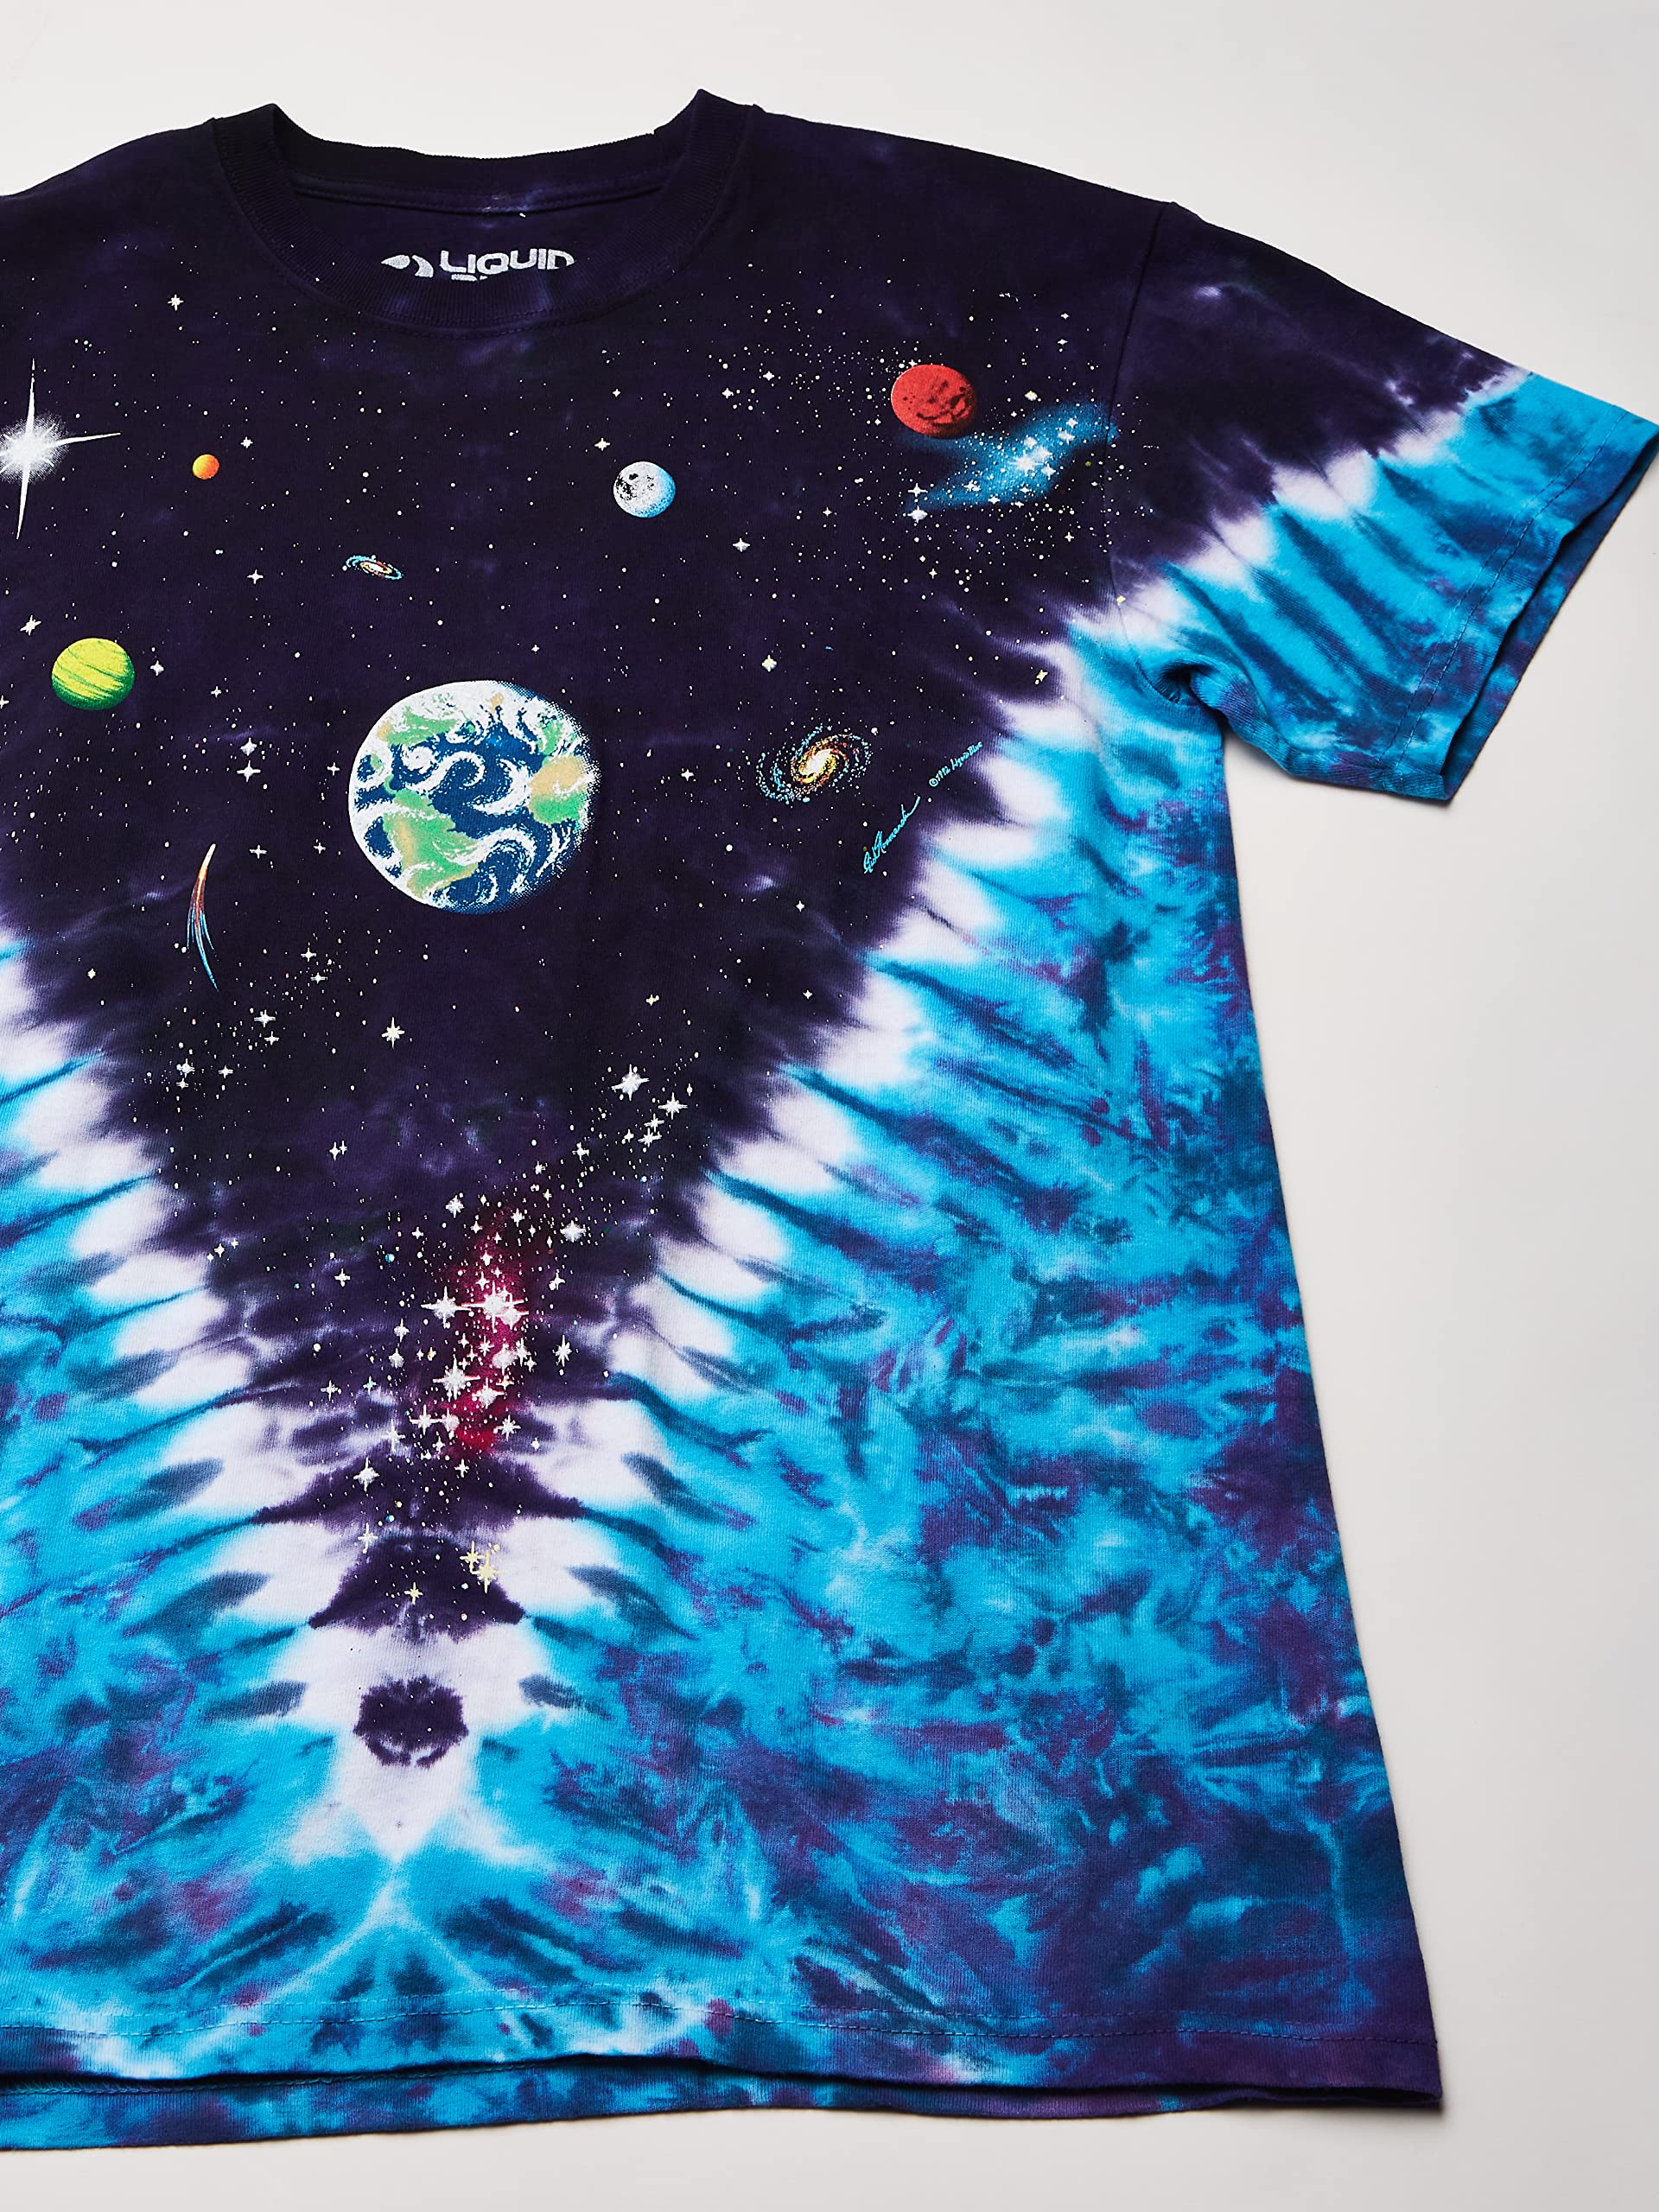 Liquid Blue Men's Space Top T-Shirt